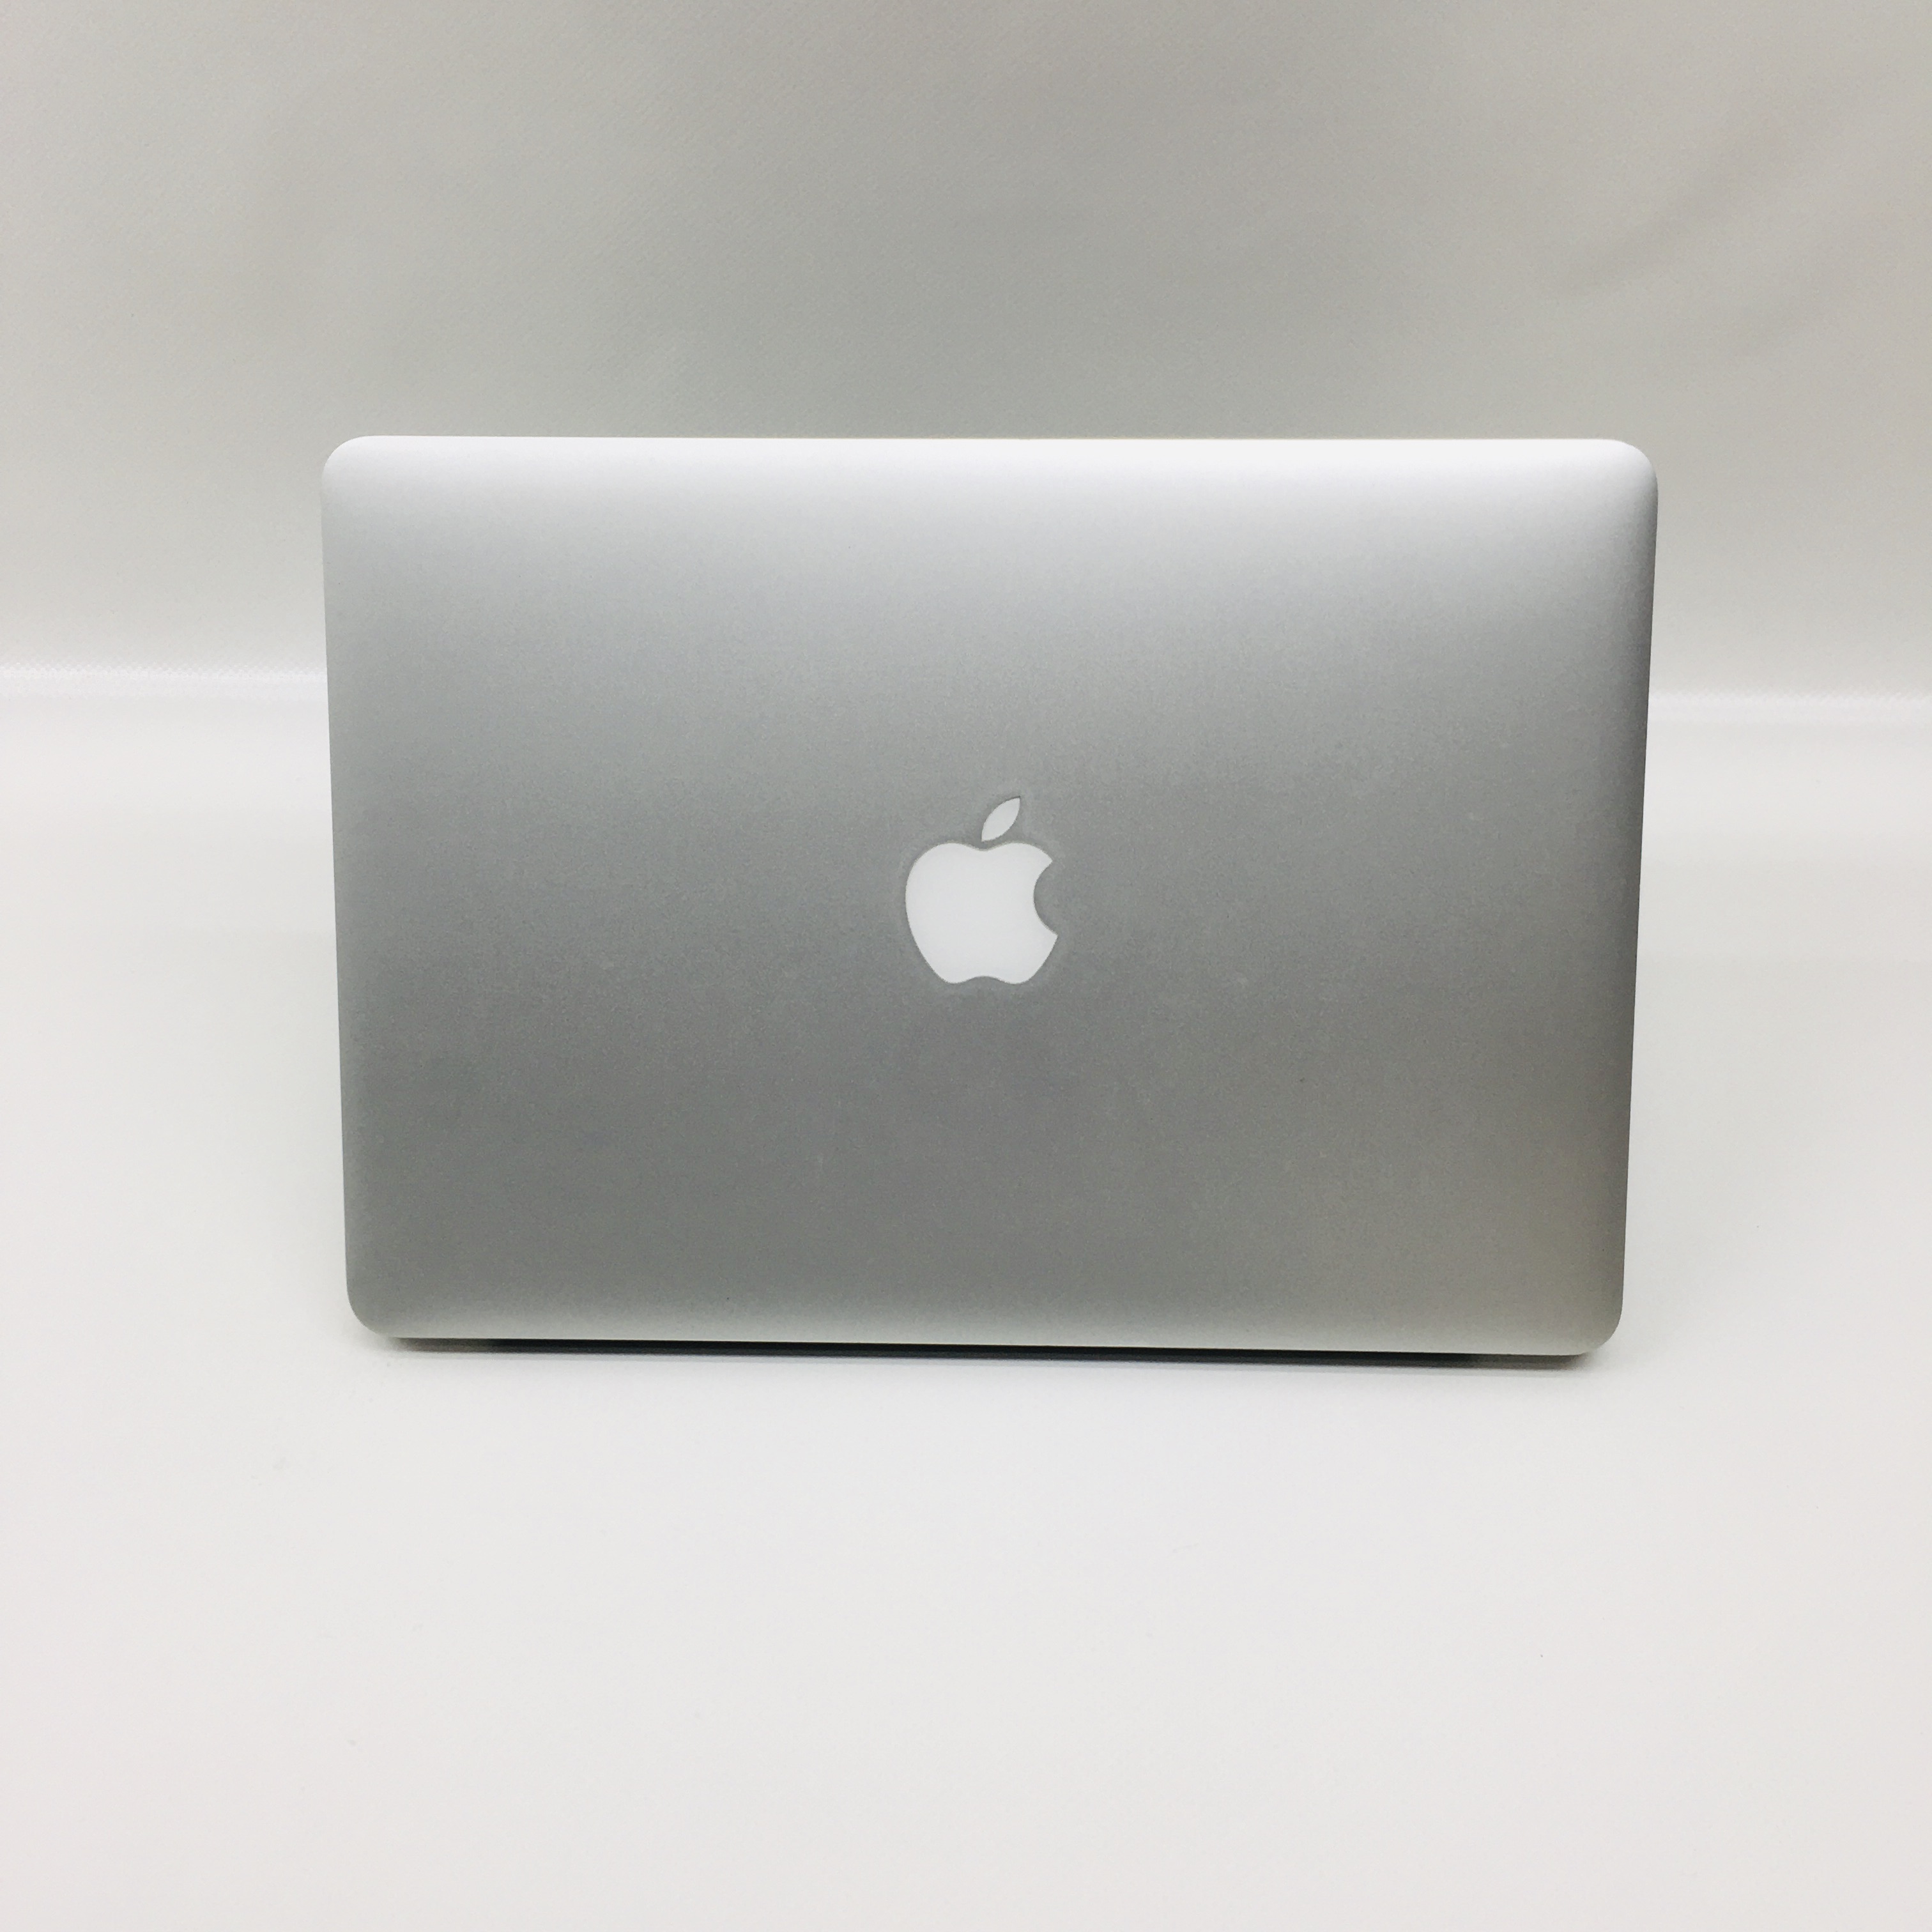 MacBook Air 13" Early 2015 (Intel Core i5 1.6 GHz 4 GB RAM 128 GB SSD), Intel Core i5 1.6 GHz, 4 GB RAM, 128 GB SSD, image 4